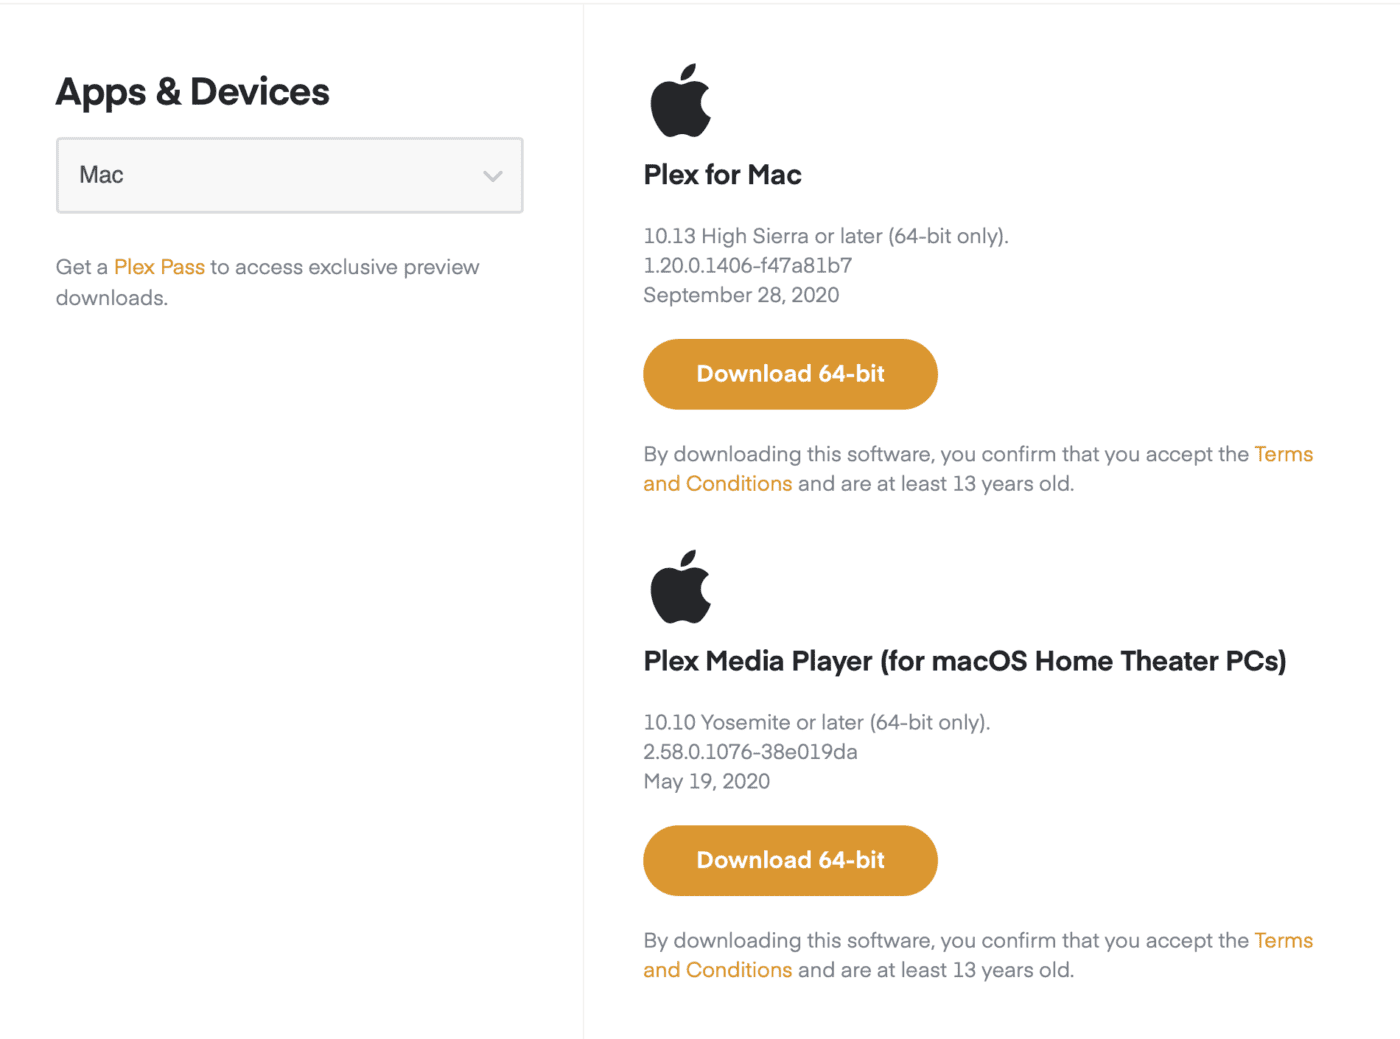 Begin setup of Plex by downloading the Plex for Mac app (64-bit) 